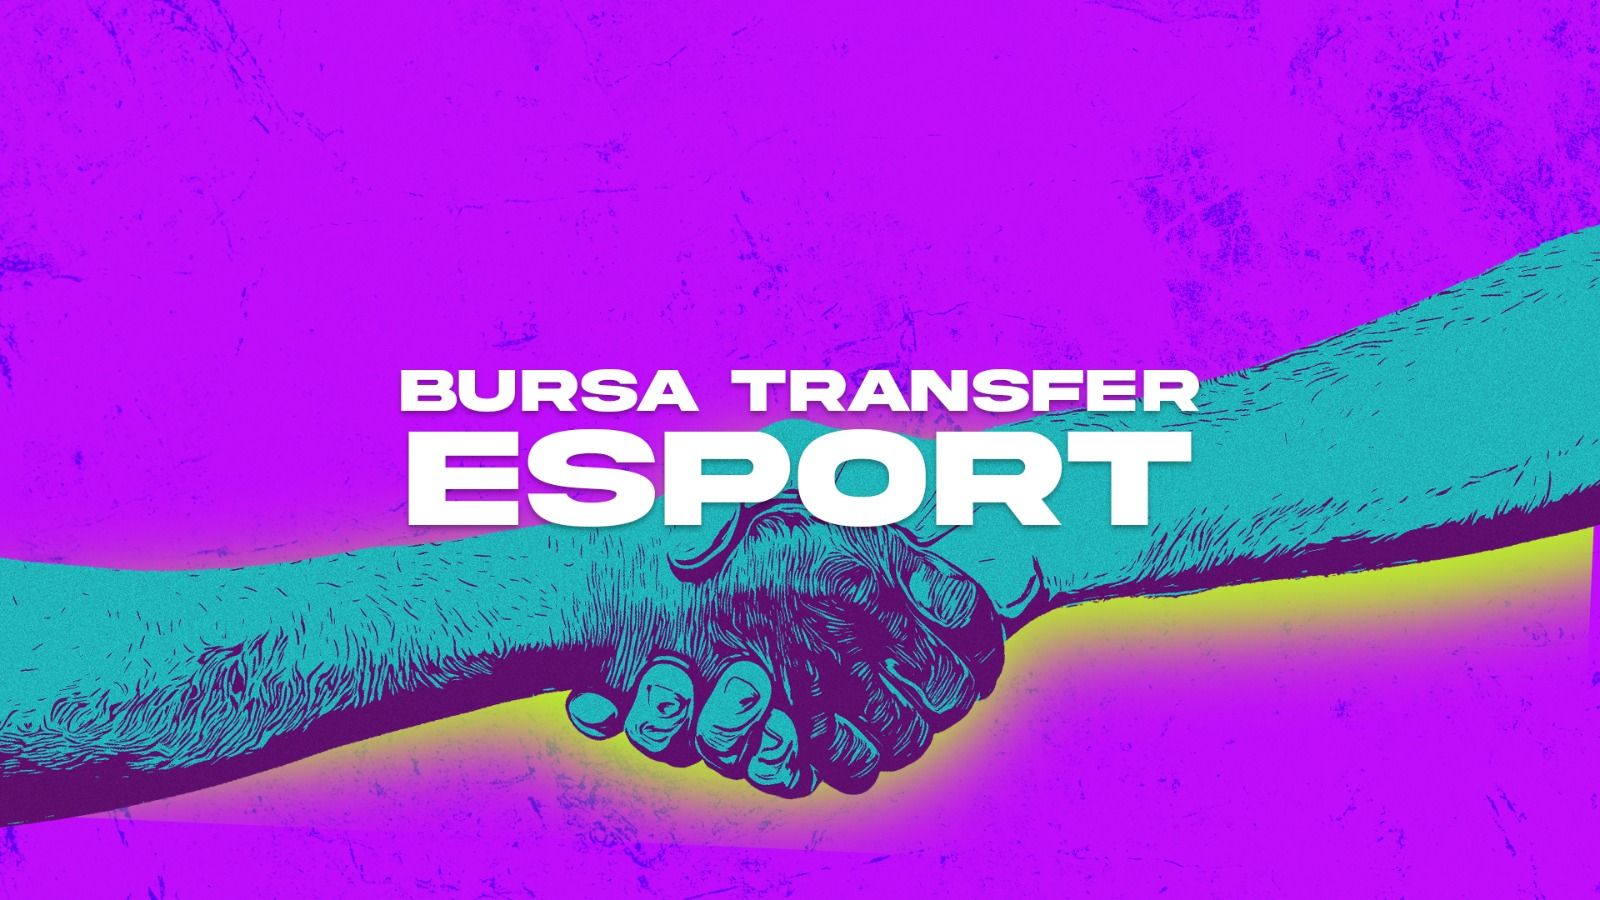 Bursa Transfer Esport